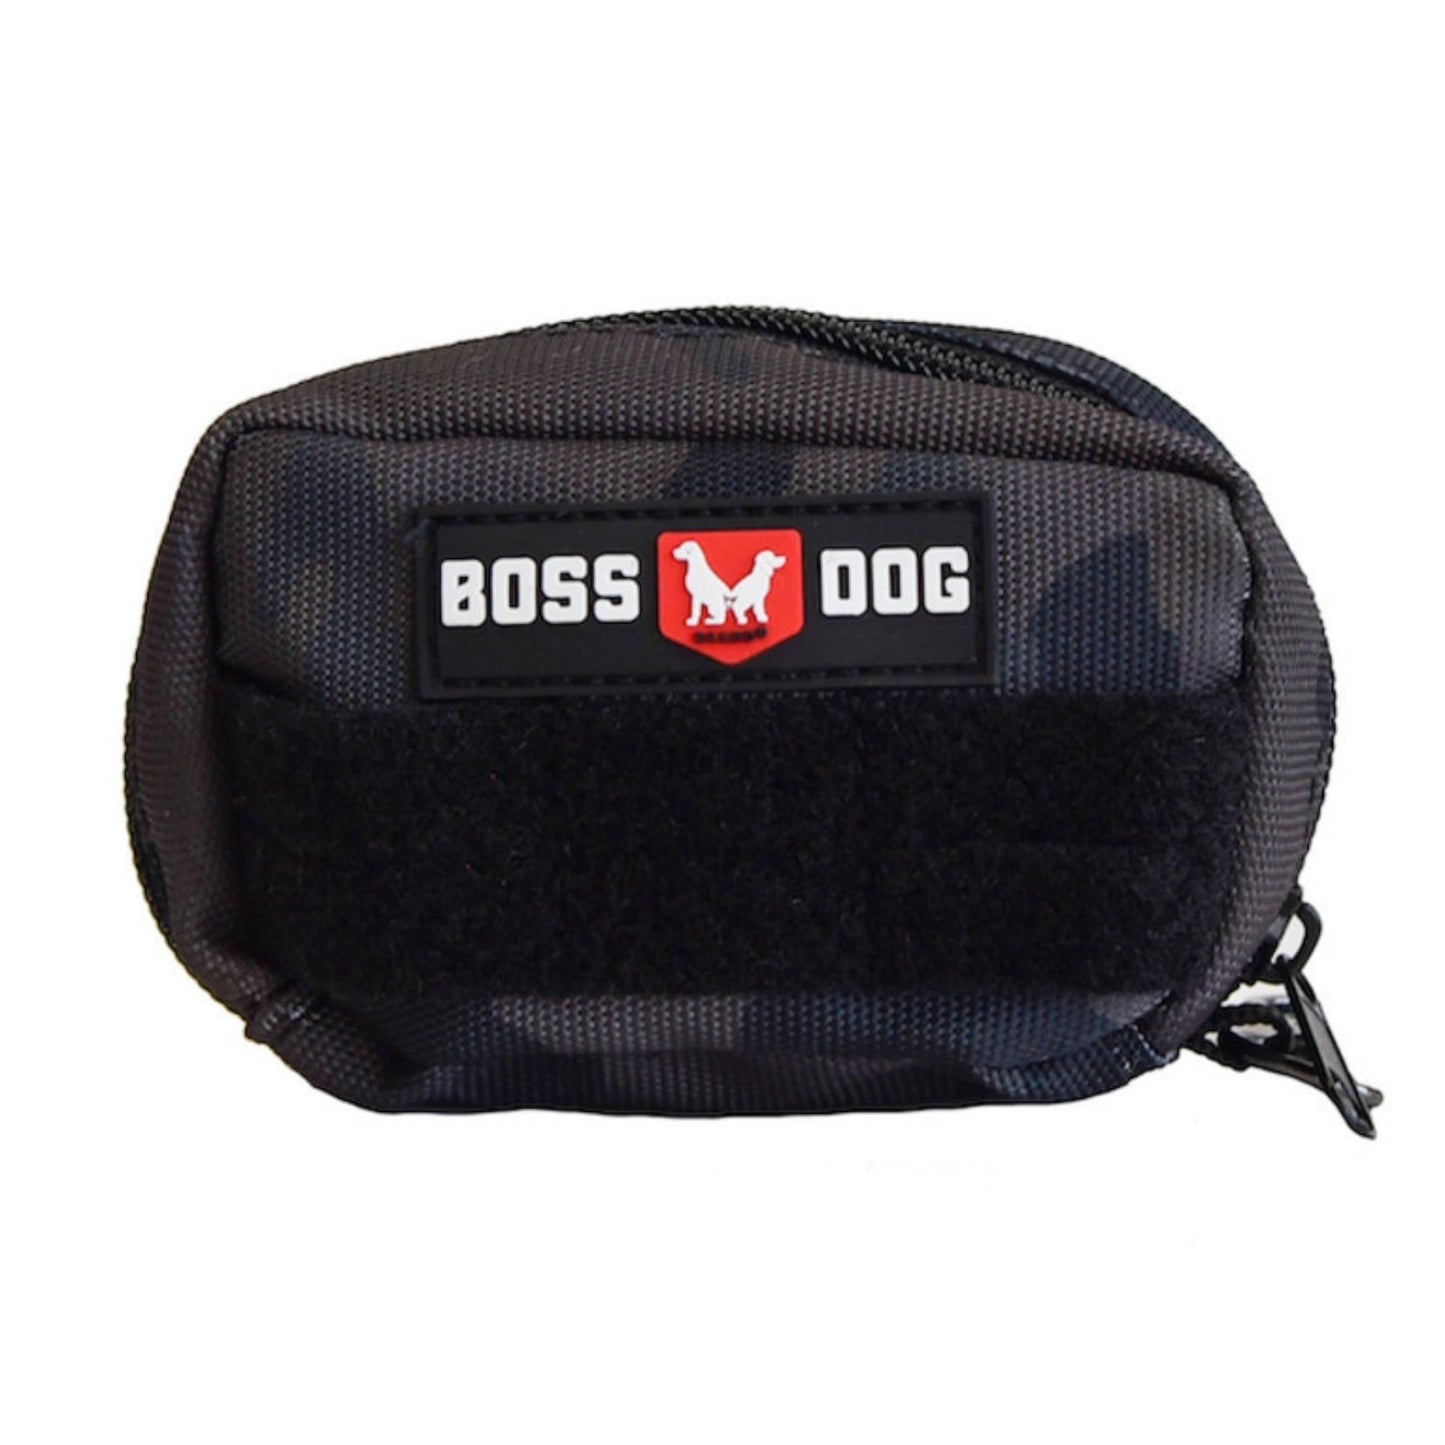 Boss Dog Tactical Molle Harness Bag Black Camo, 1ea/Small